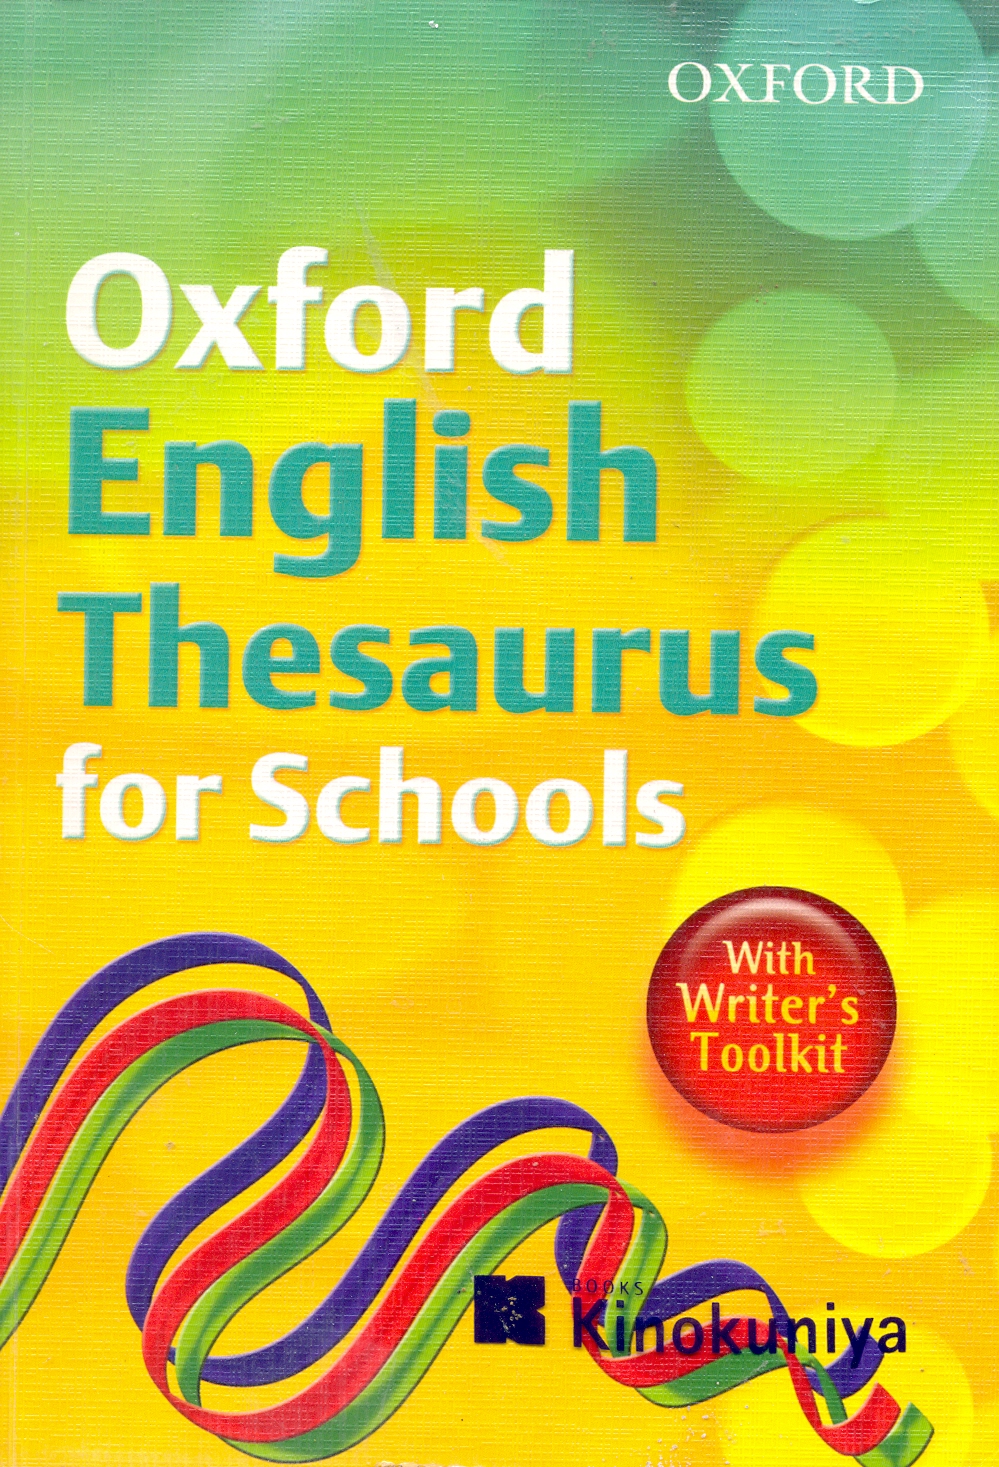 Oxford english thesaurus for schools